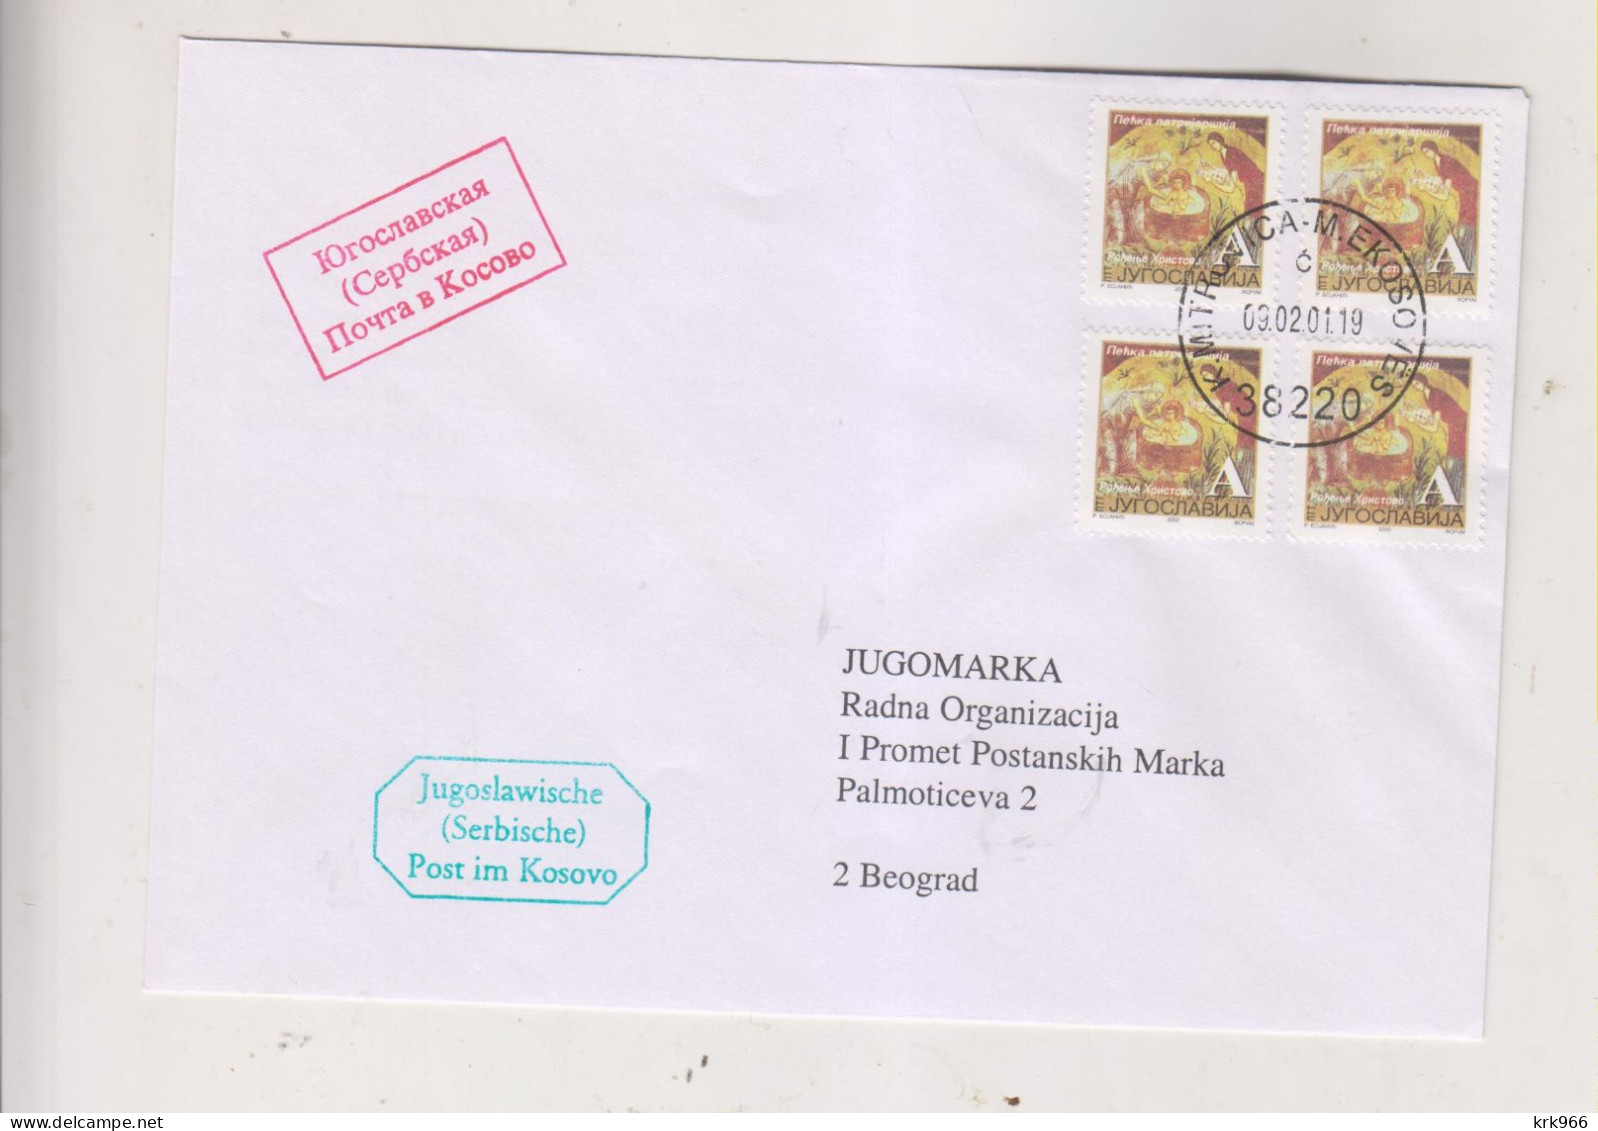 YUGOSLAVIA,2001 KOSOVO KOSOVSKA MITROVICA SERBIAN POST Nice Cover - Storia Postale